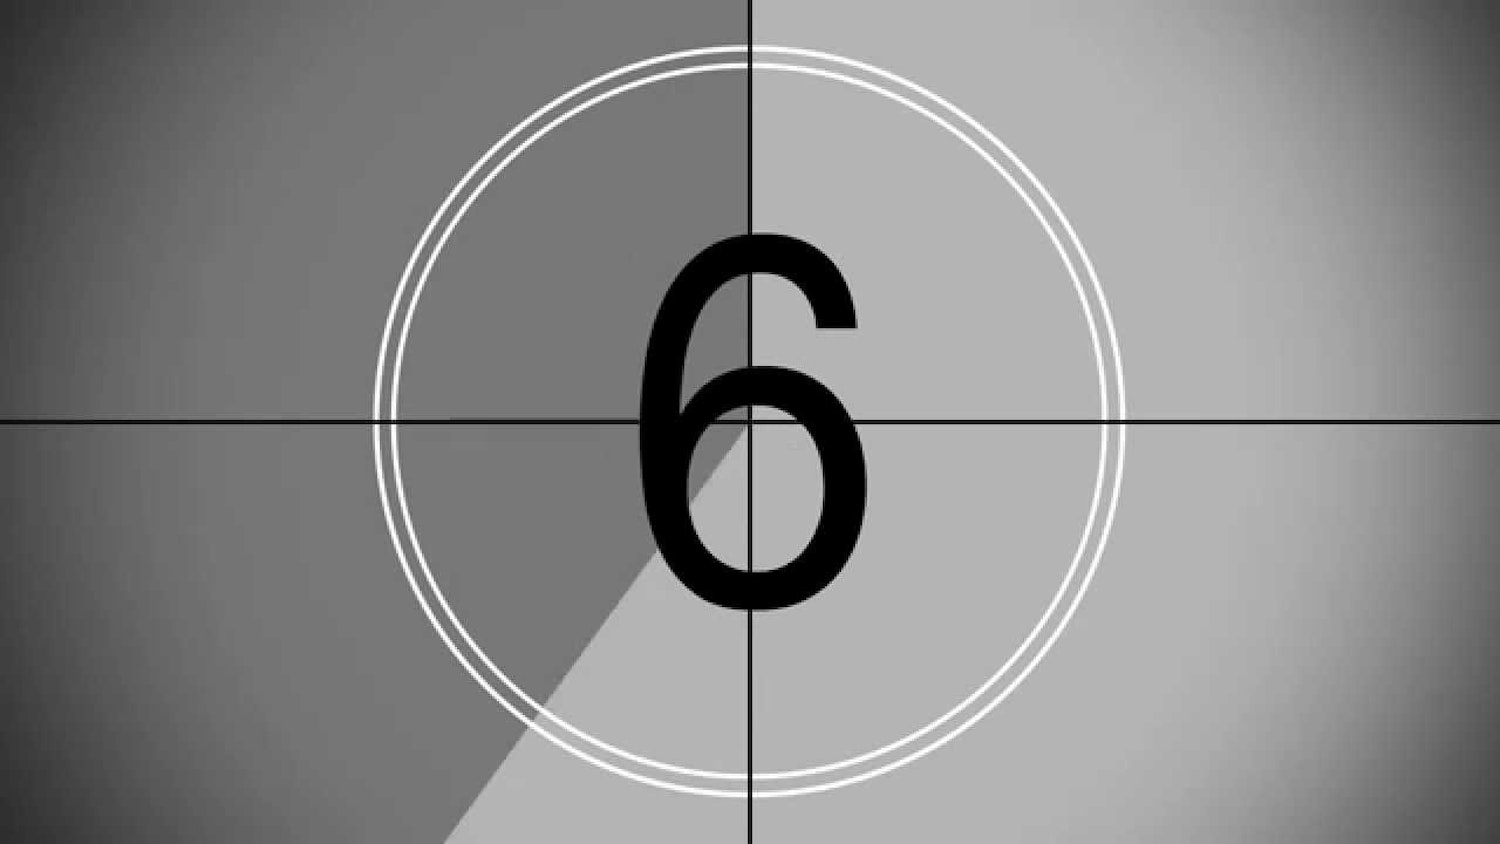 Six second. Countdown. Countdown nz. Отсчет 4 картинки. Alliedmods Countdown.